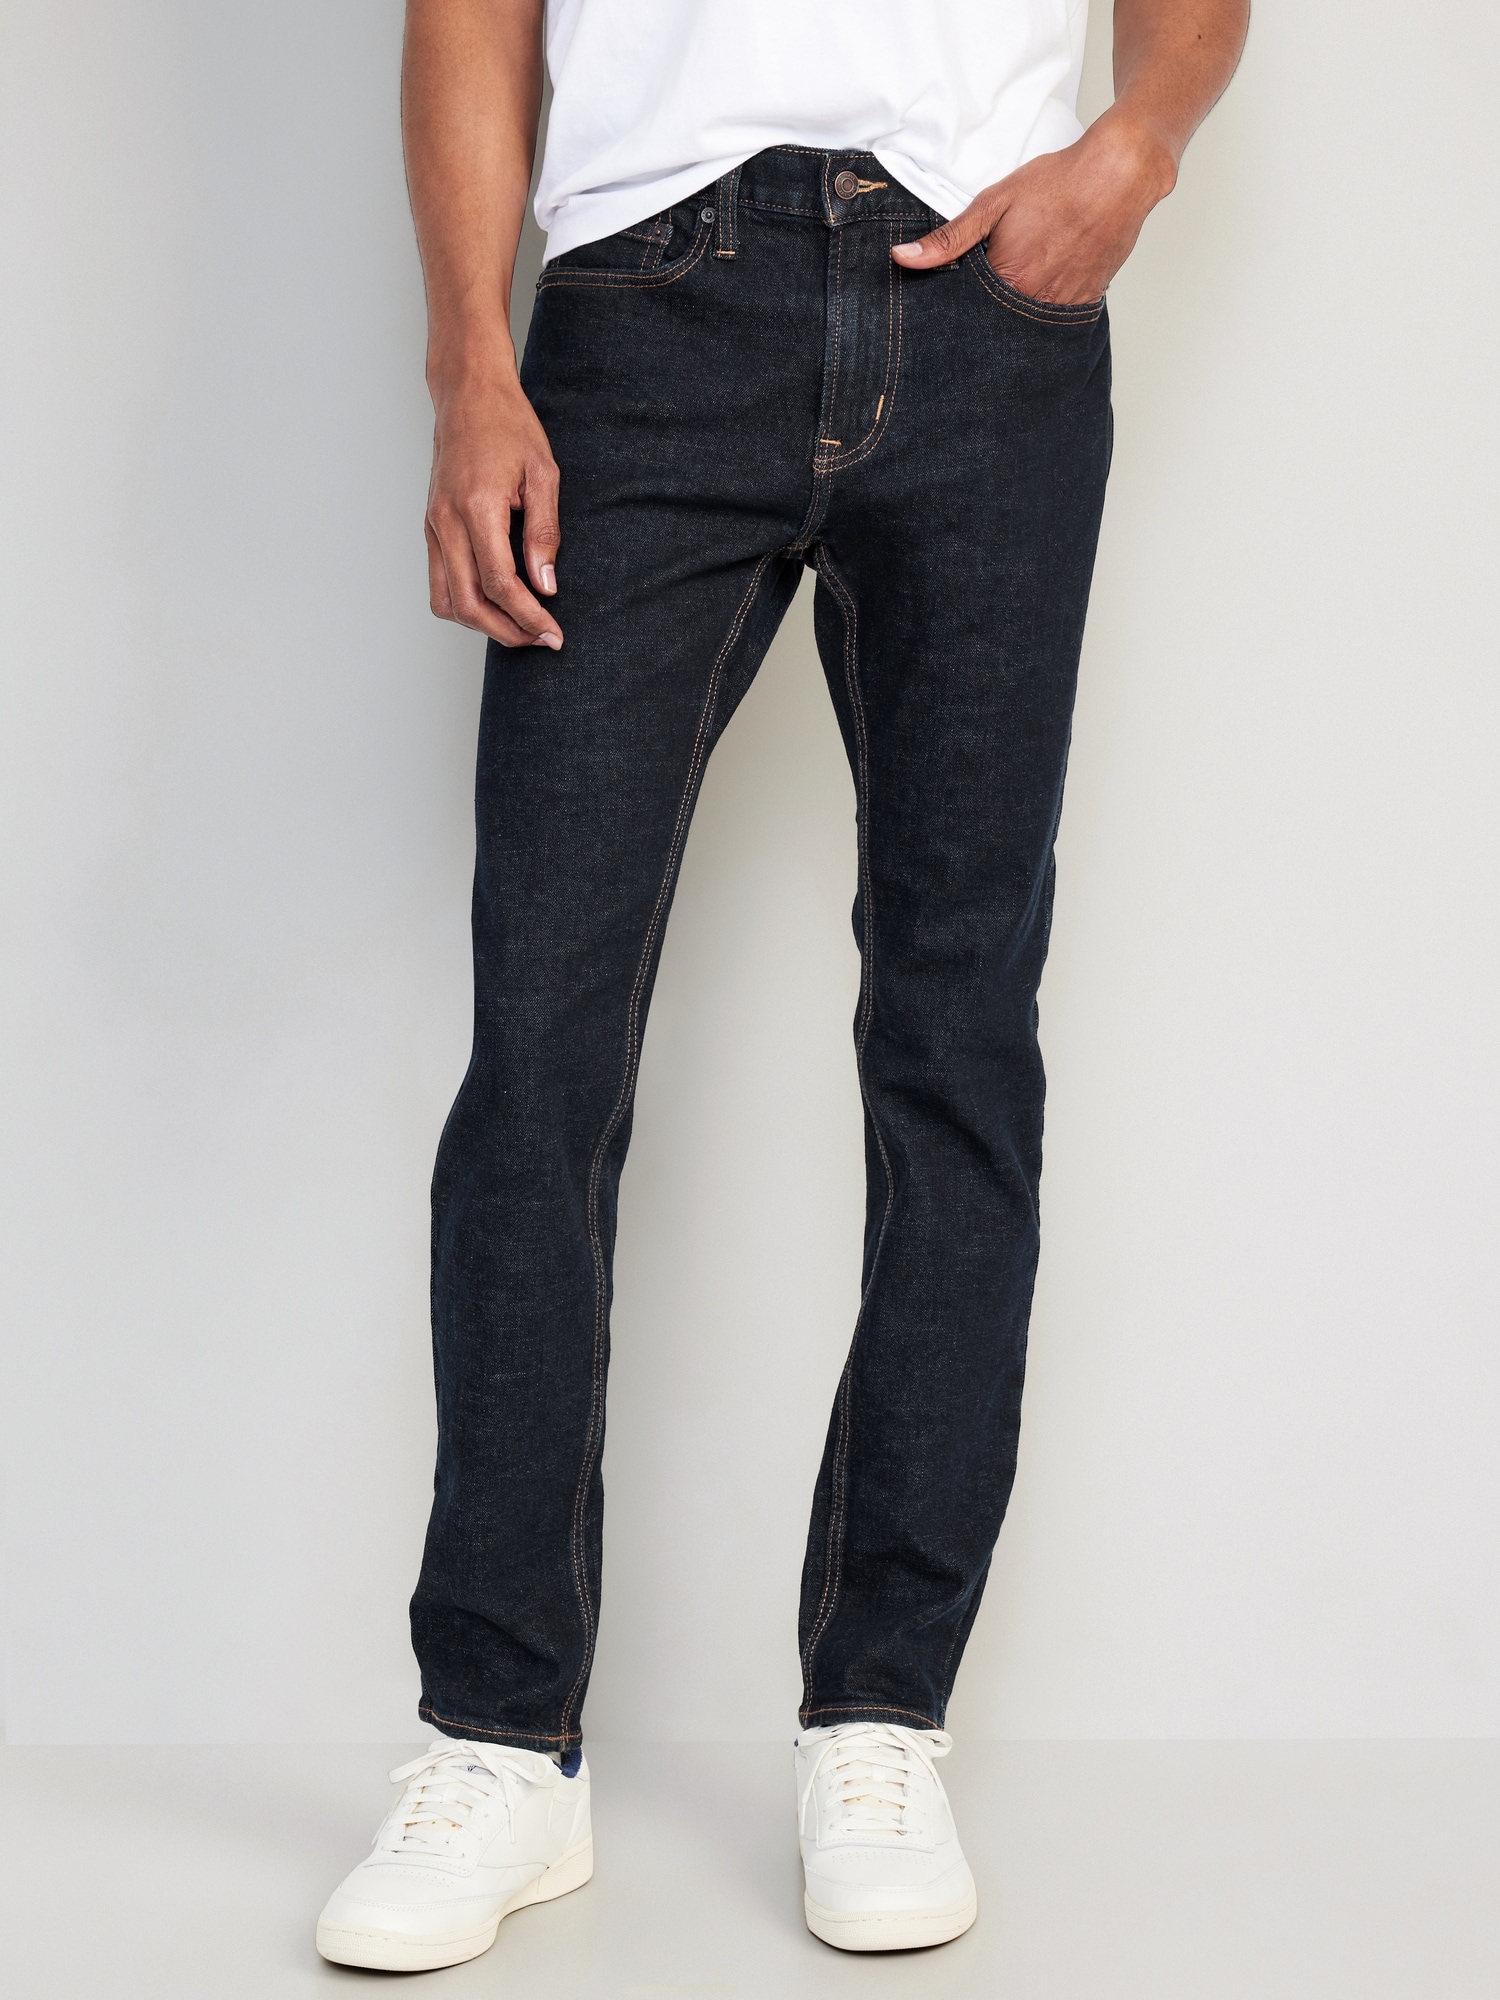 Slim Built-In-Flex Jeans